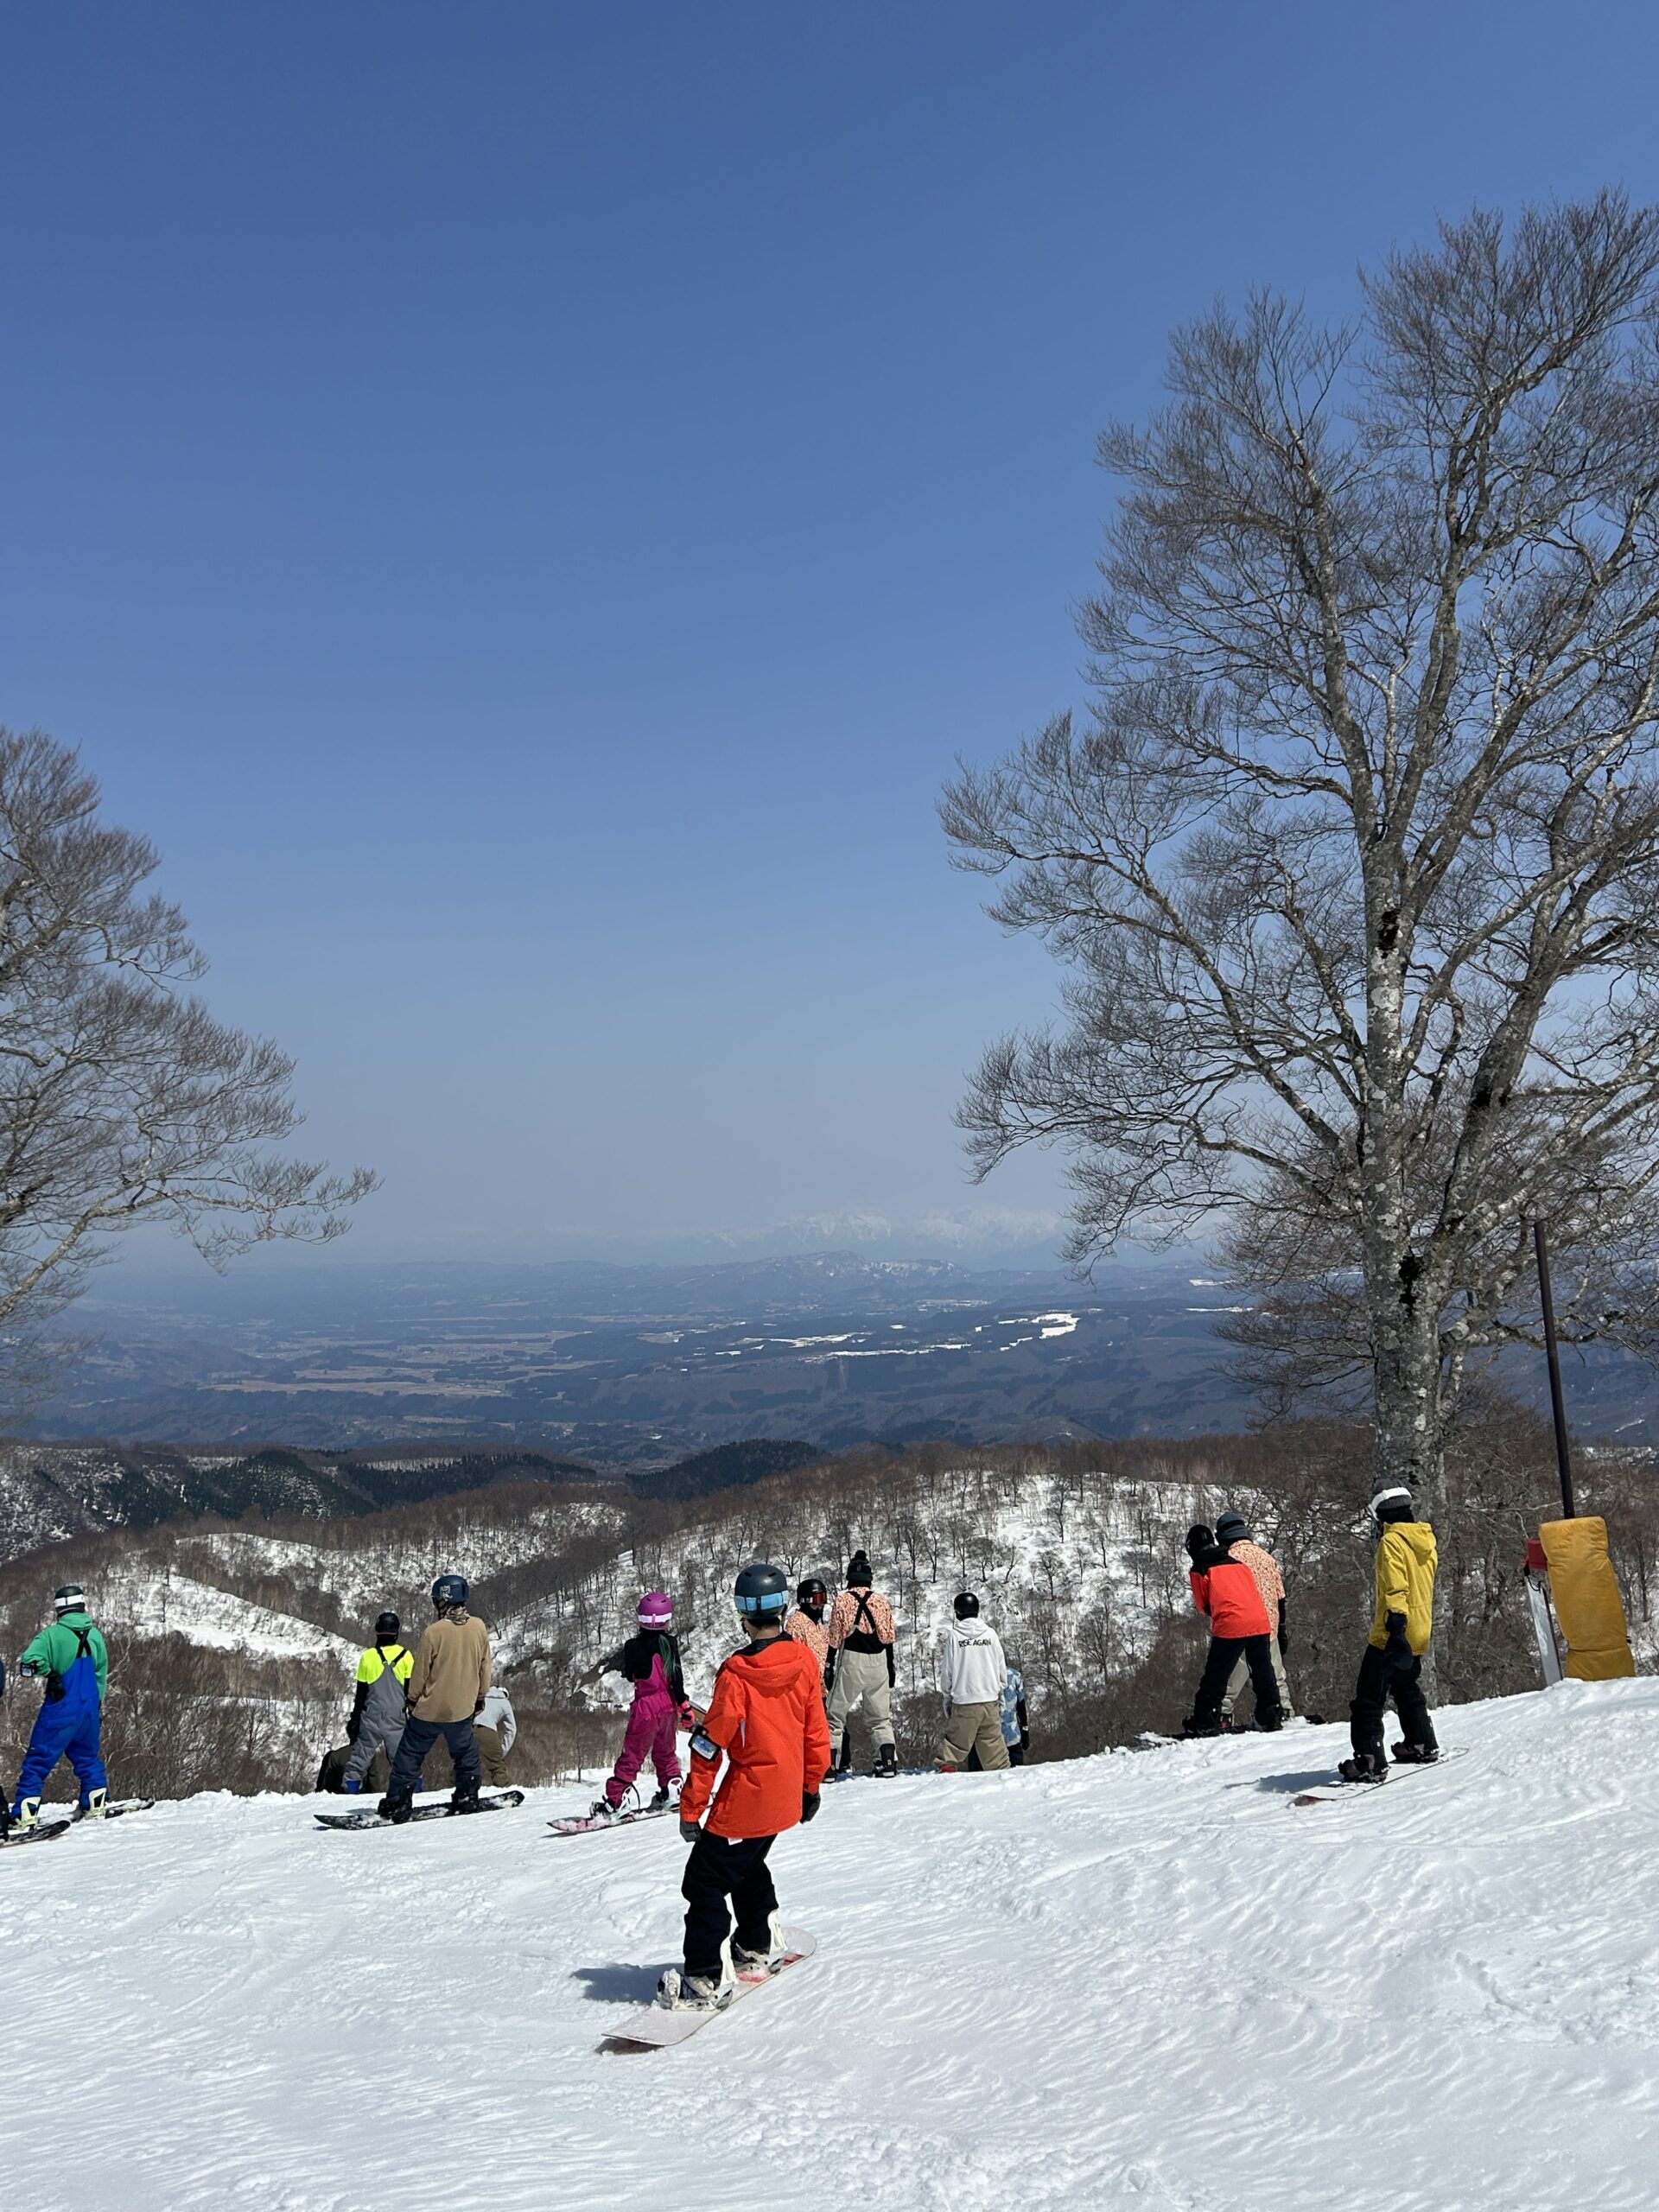 Clear skies on the slopes of Nozawa Onsen